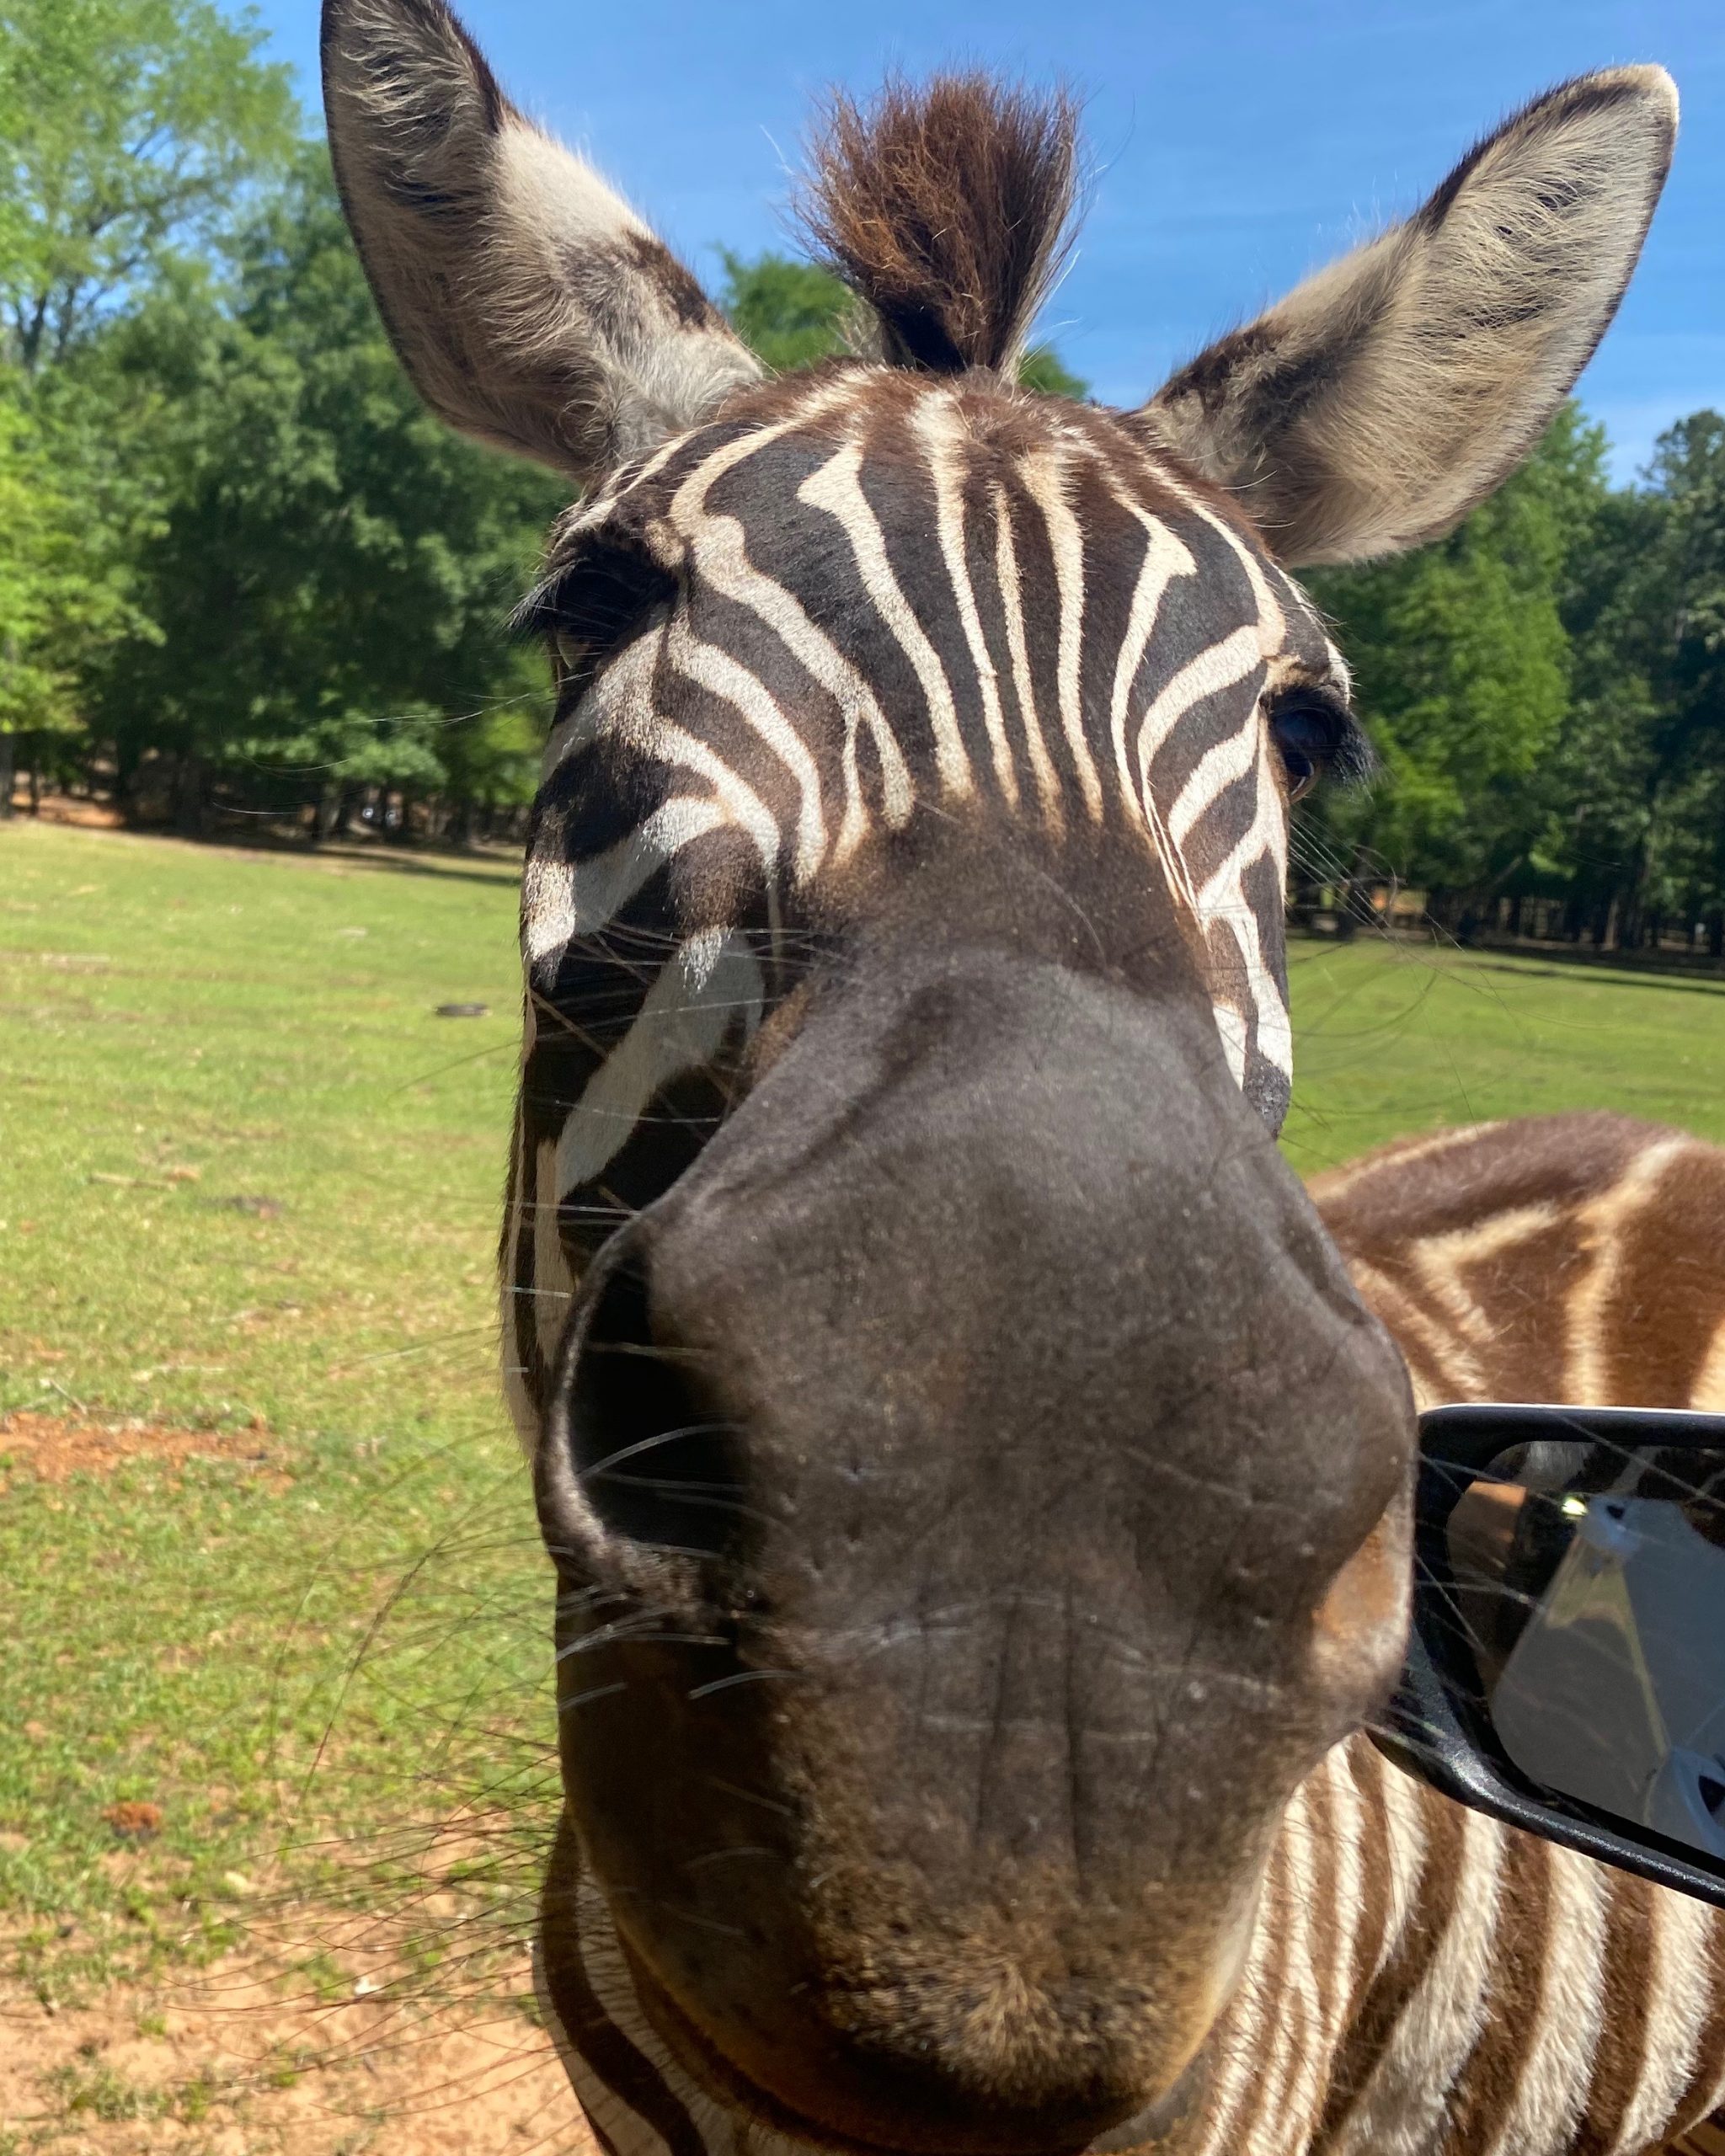 zebra in car window at Cherokee Trace Drive-Thru Safari in Jacksonville